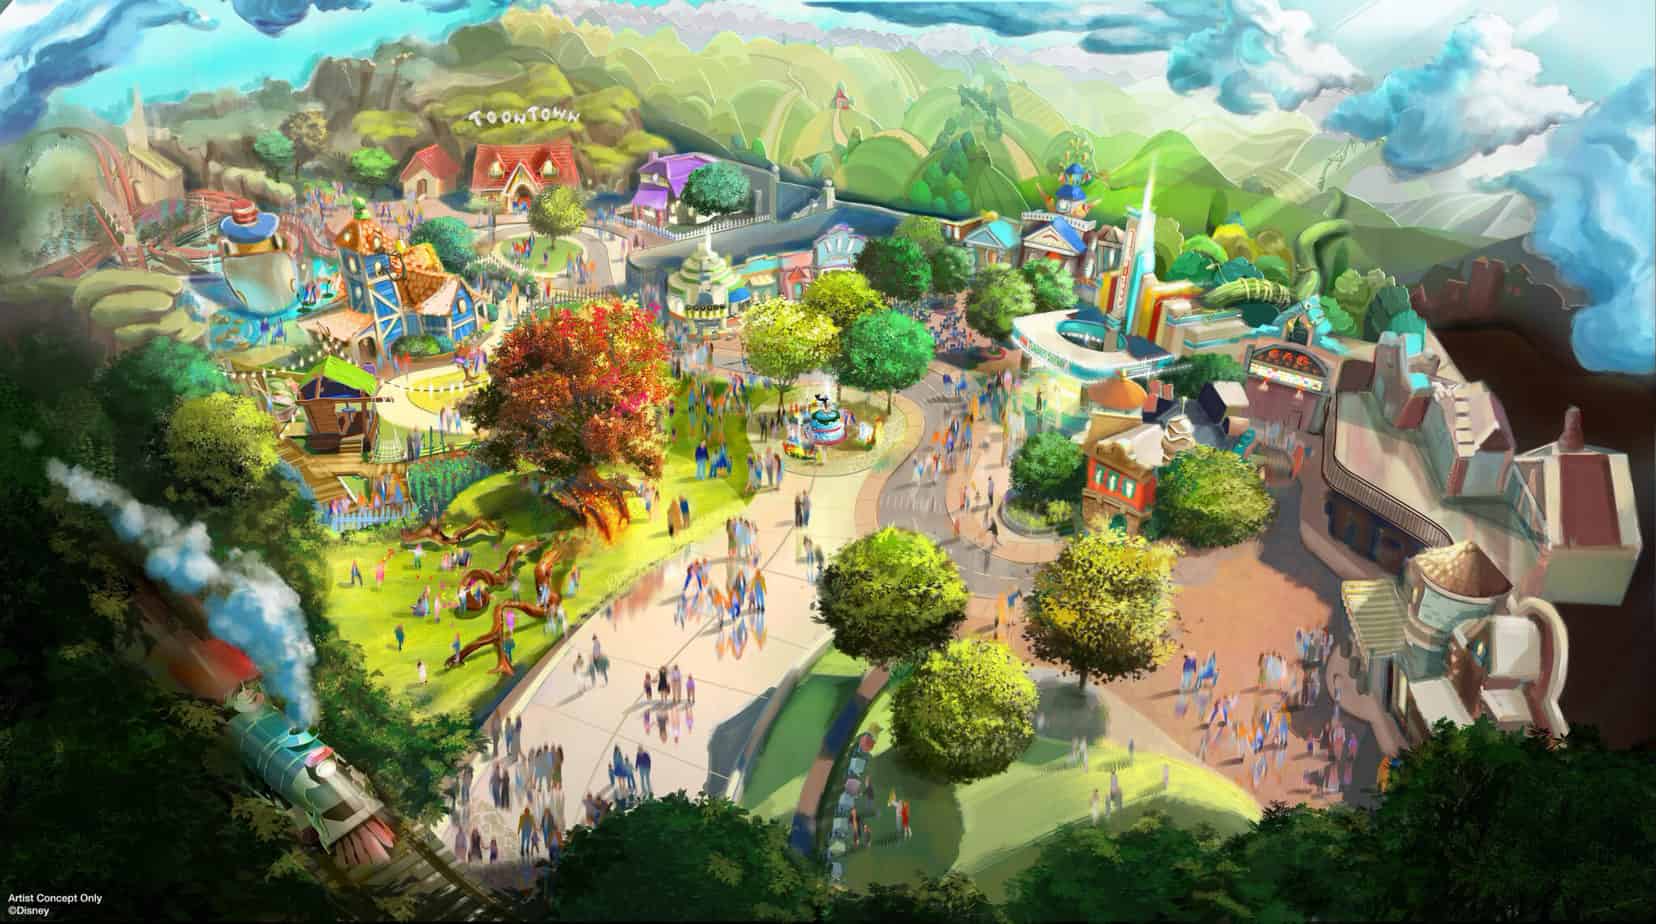 (Artist Concept/Disneyland Resort)